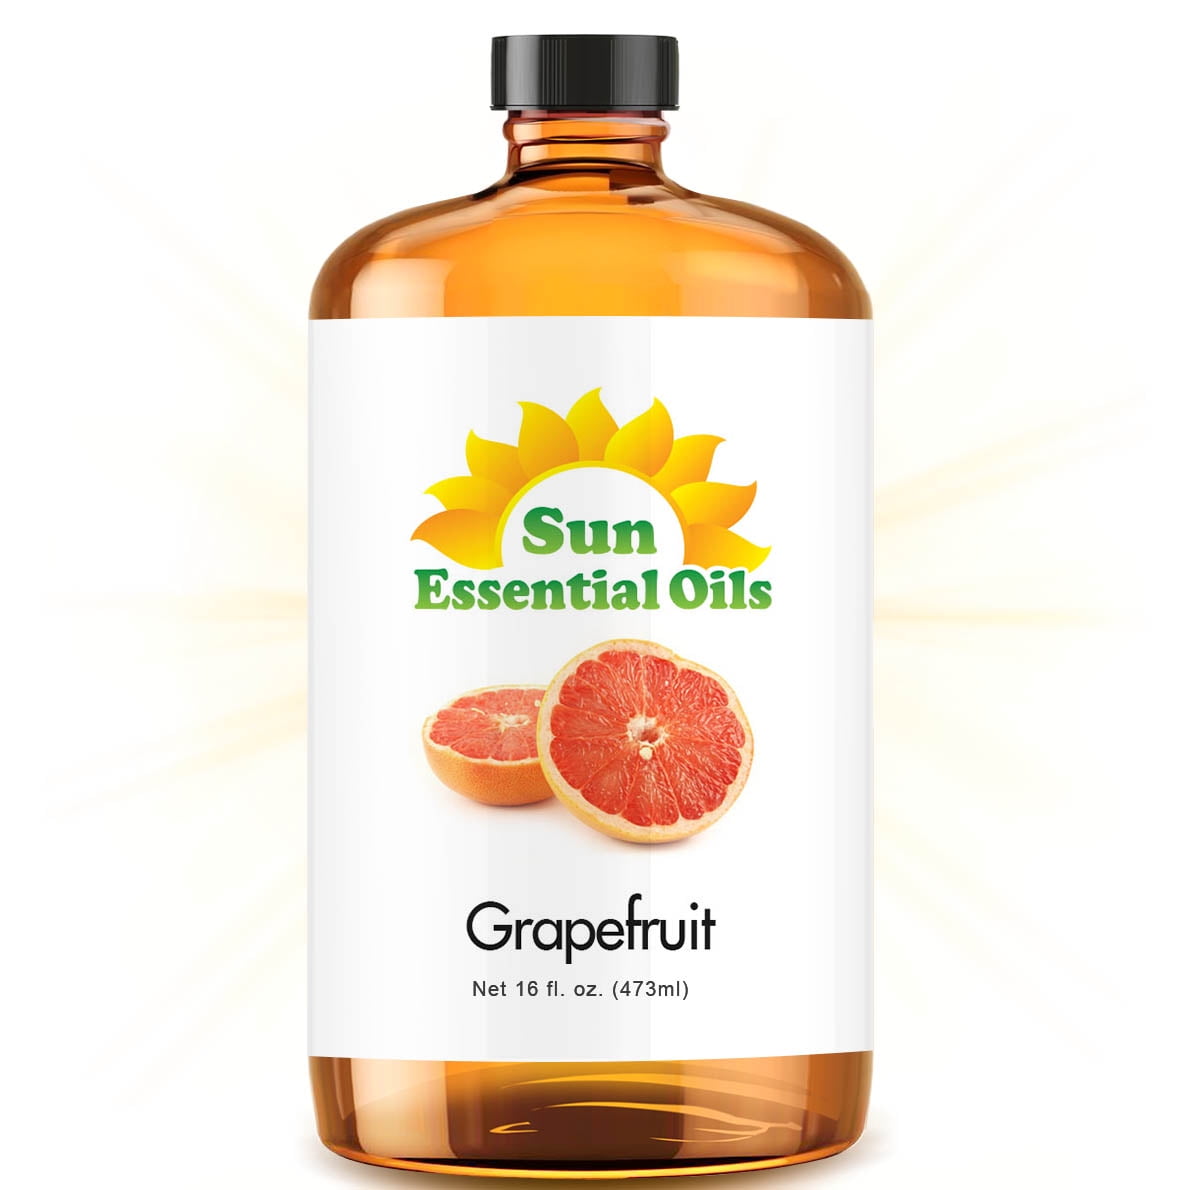 revive grapefruit oil